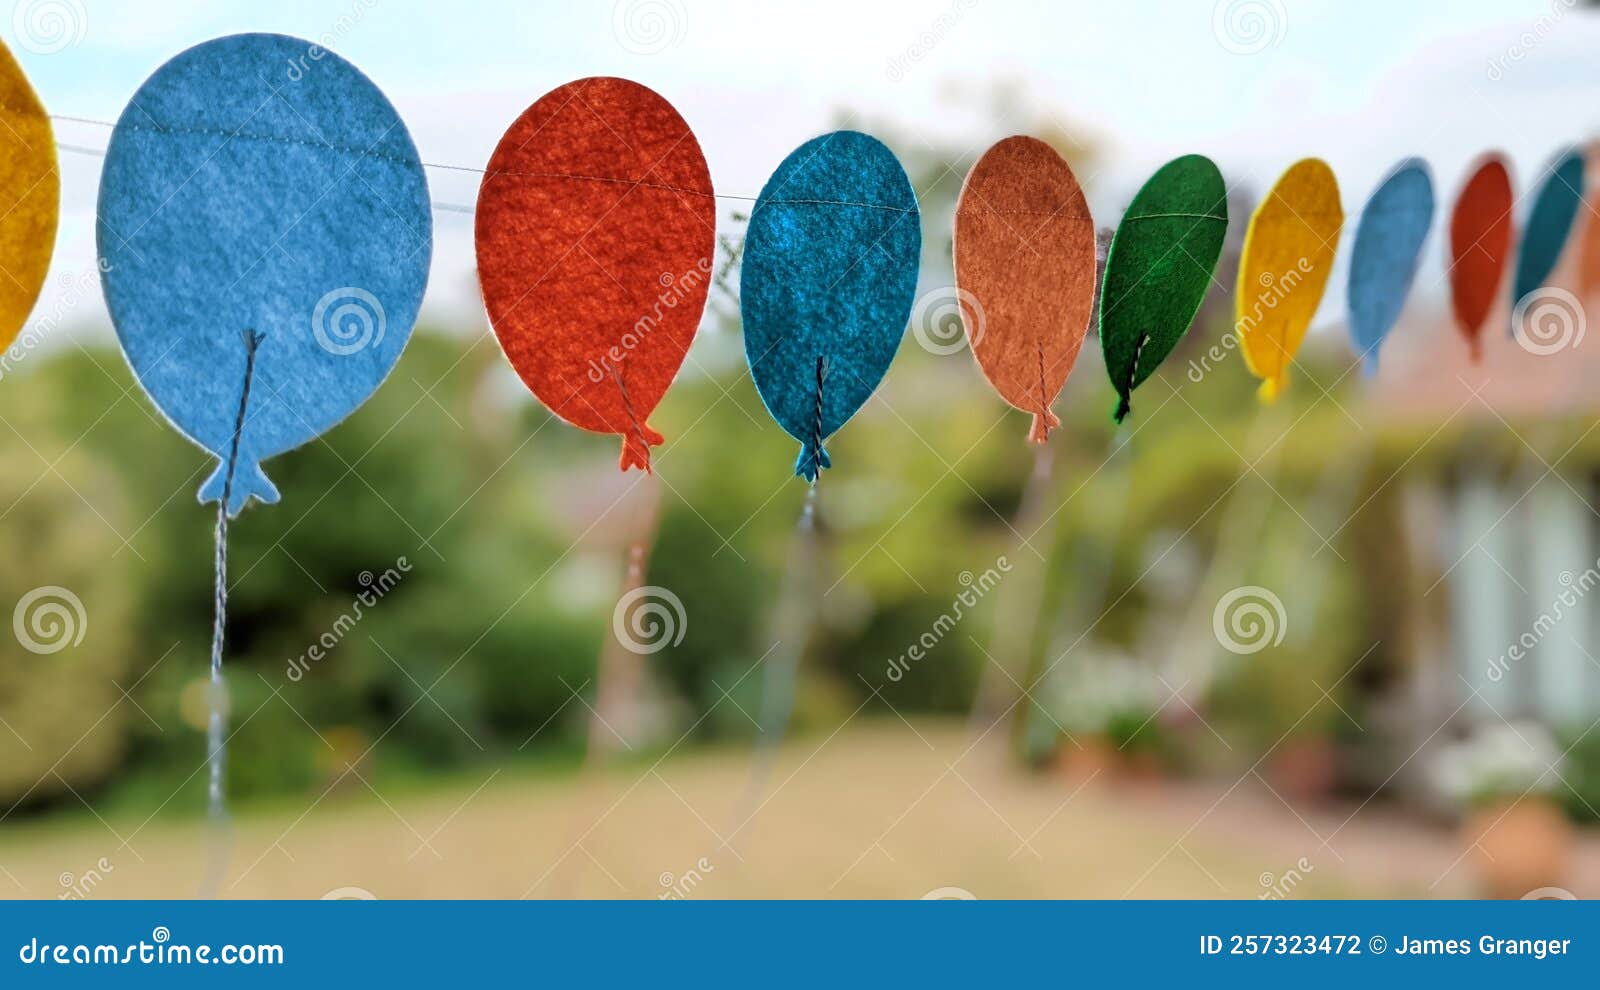 A Row of Felt Balloons Hanging on a String in the Garden Stock Photo -  Image of petal, garden: 257323472